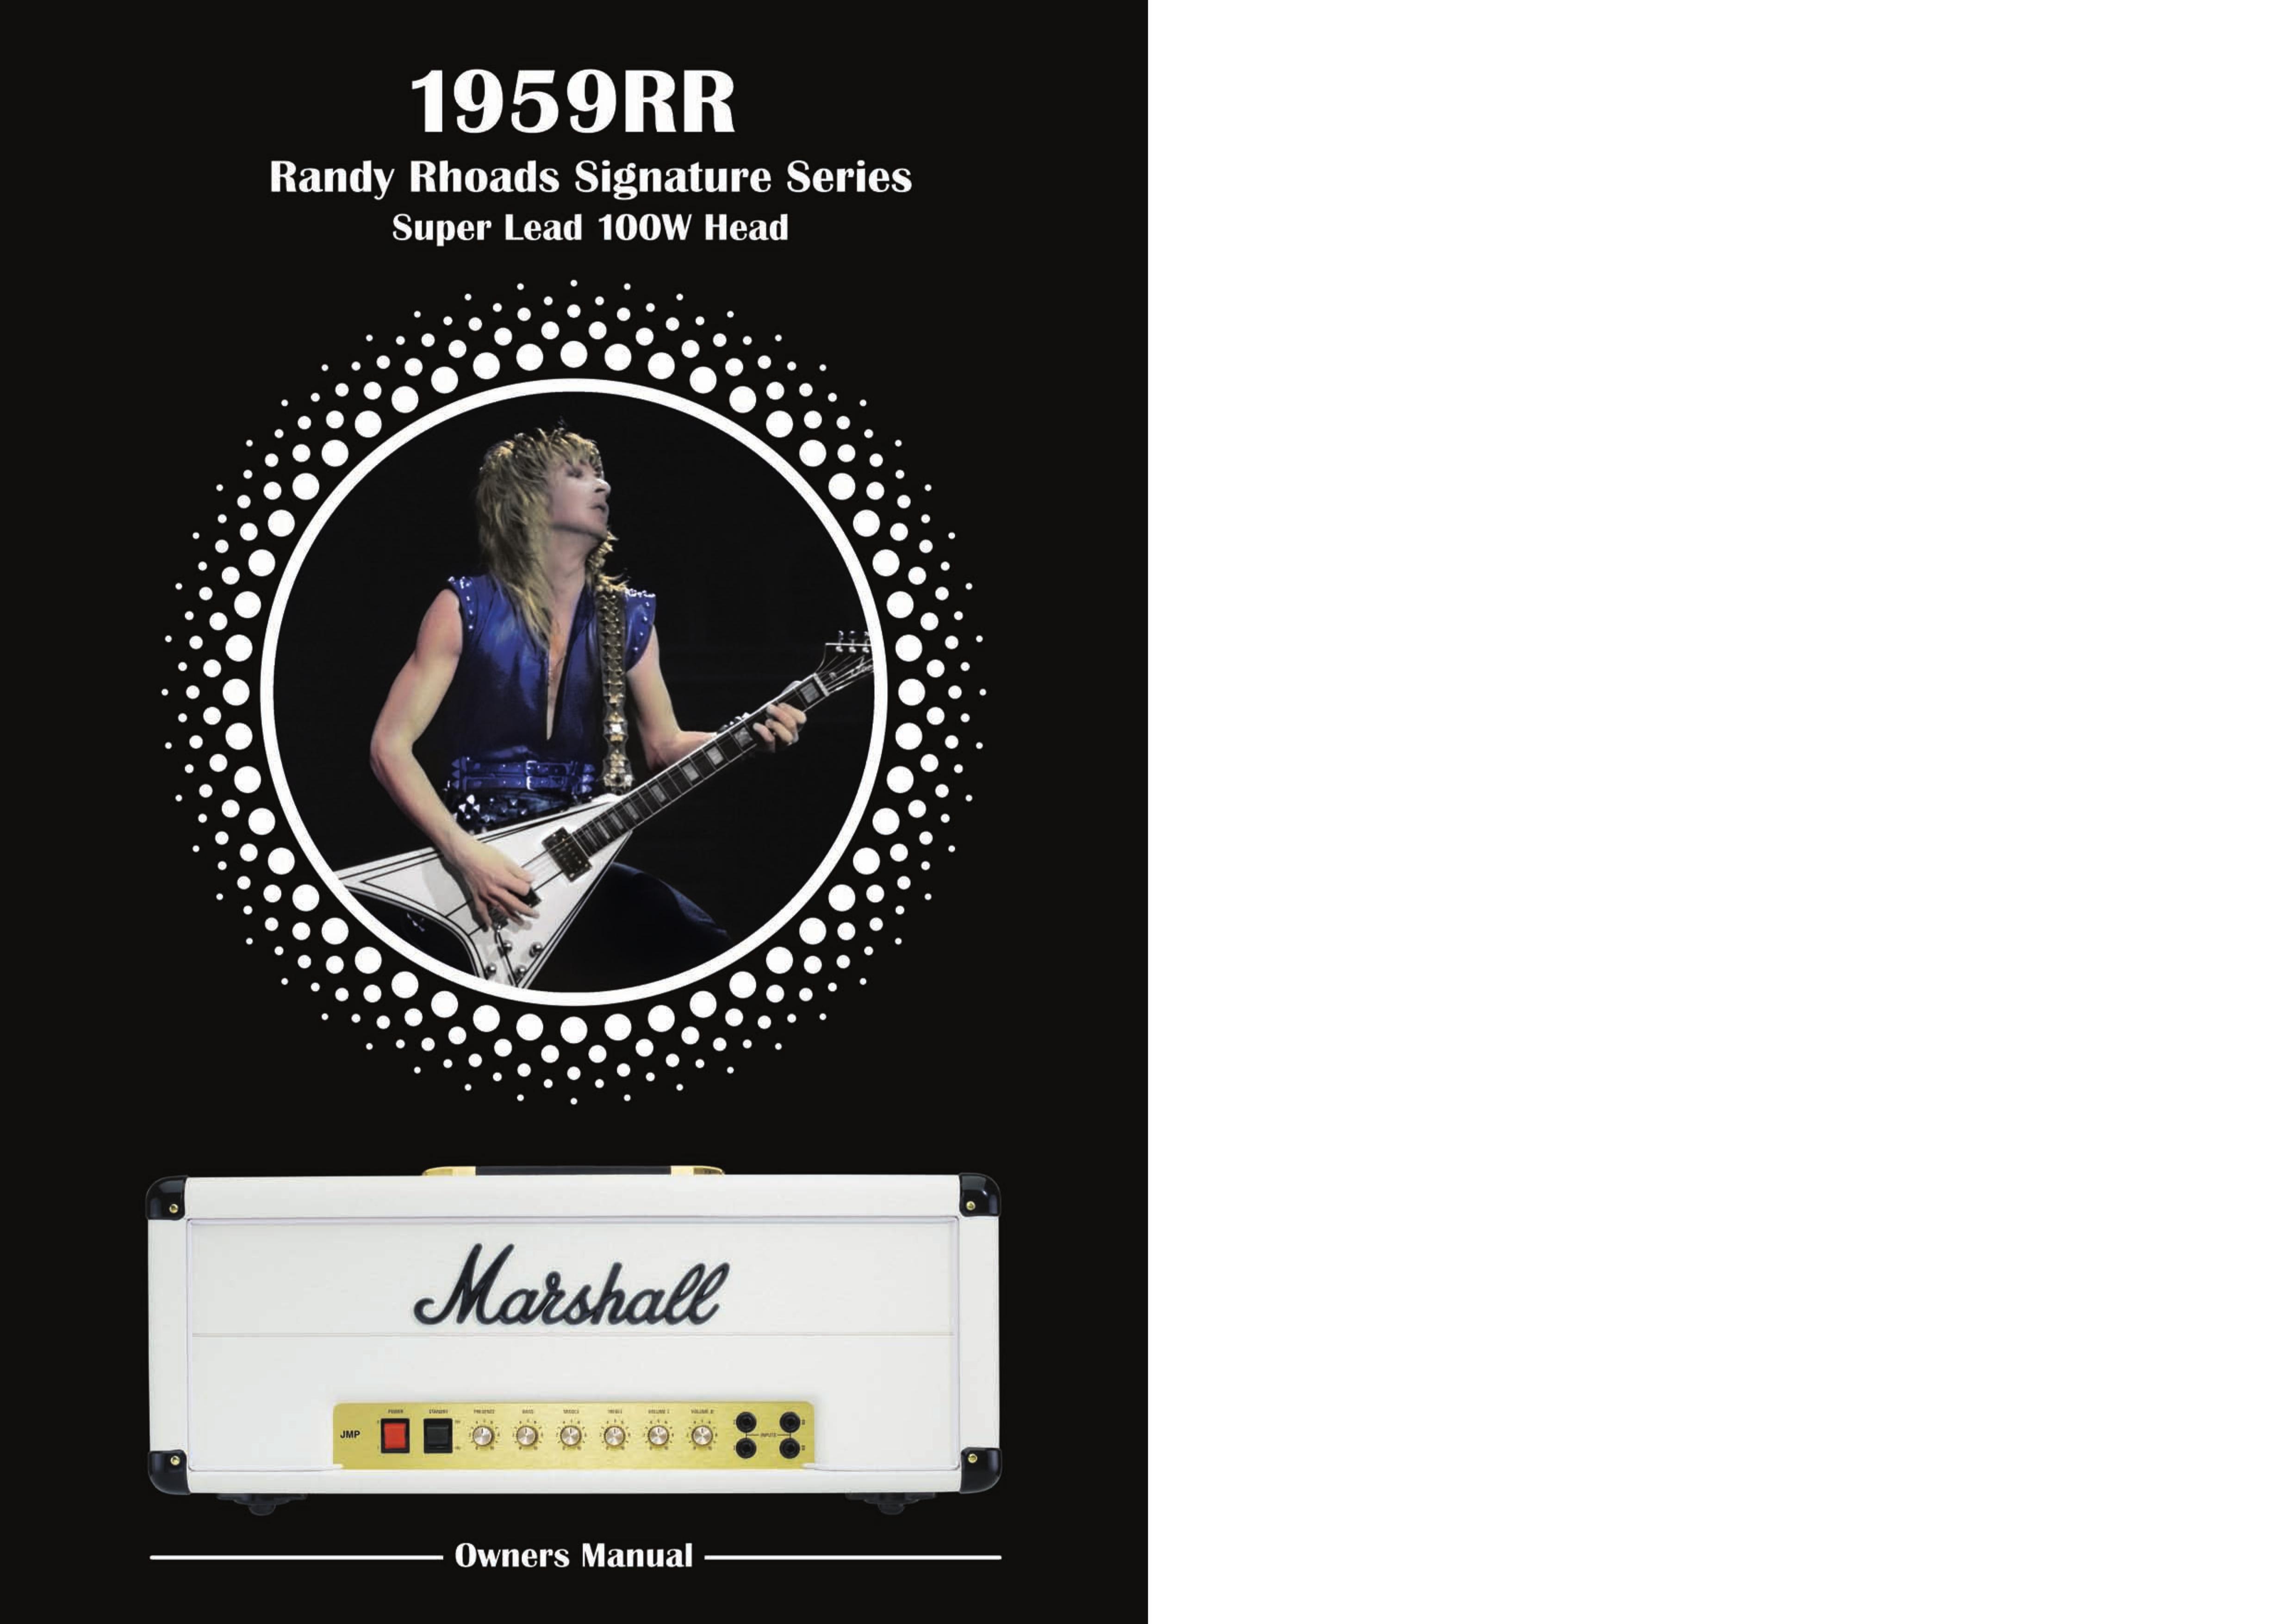 Marshall Amplification 1959RR Musical Instrument Amplifier User Manual